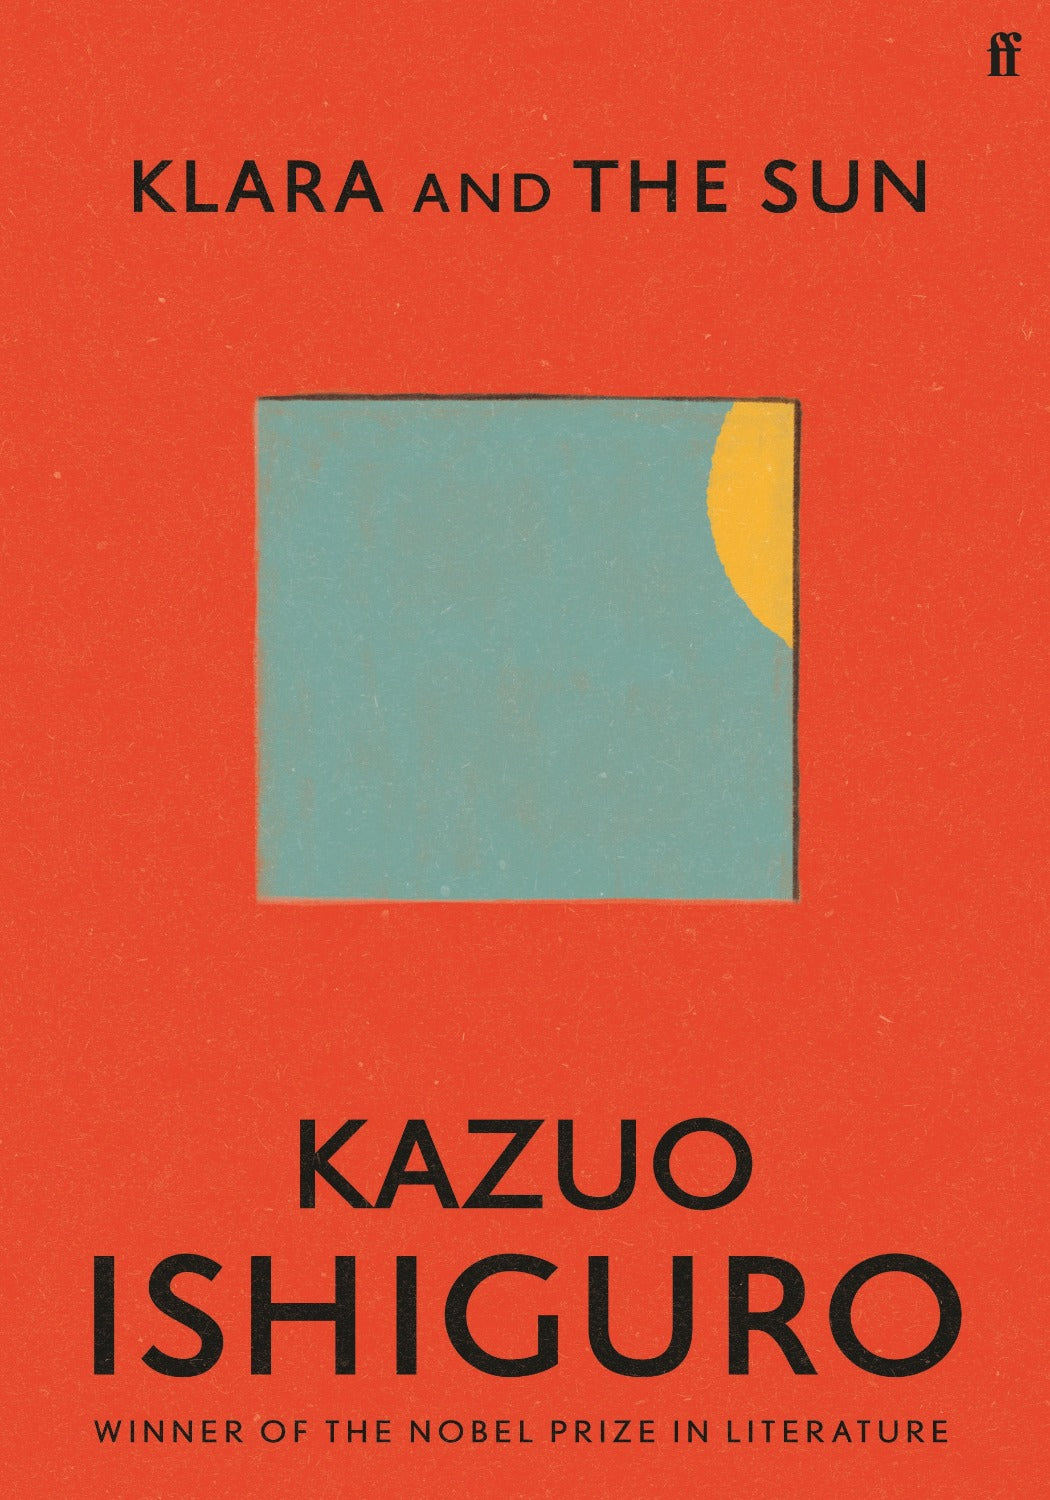 Klara and the Sun by Kazuo Ishiguro in Trade Paperback $32.99